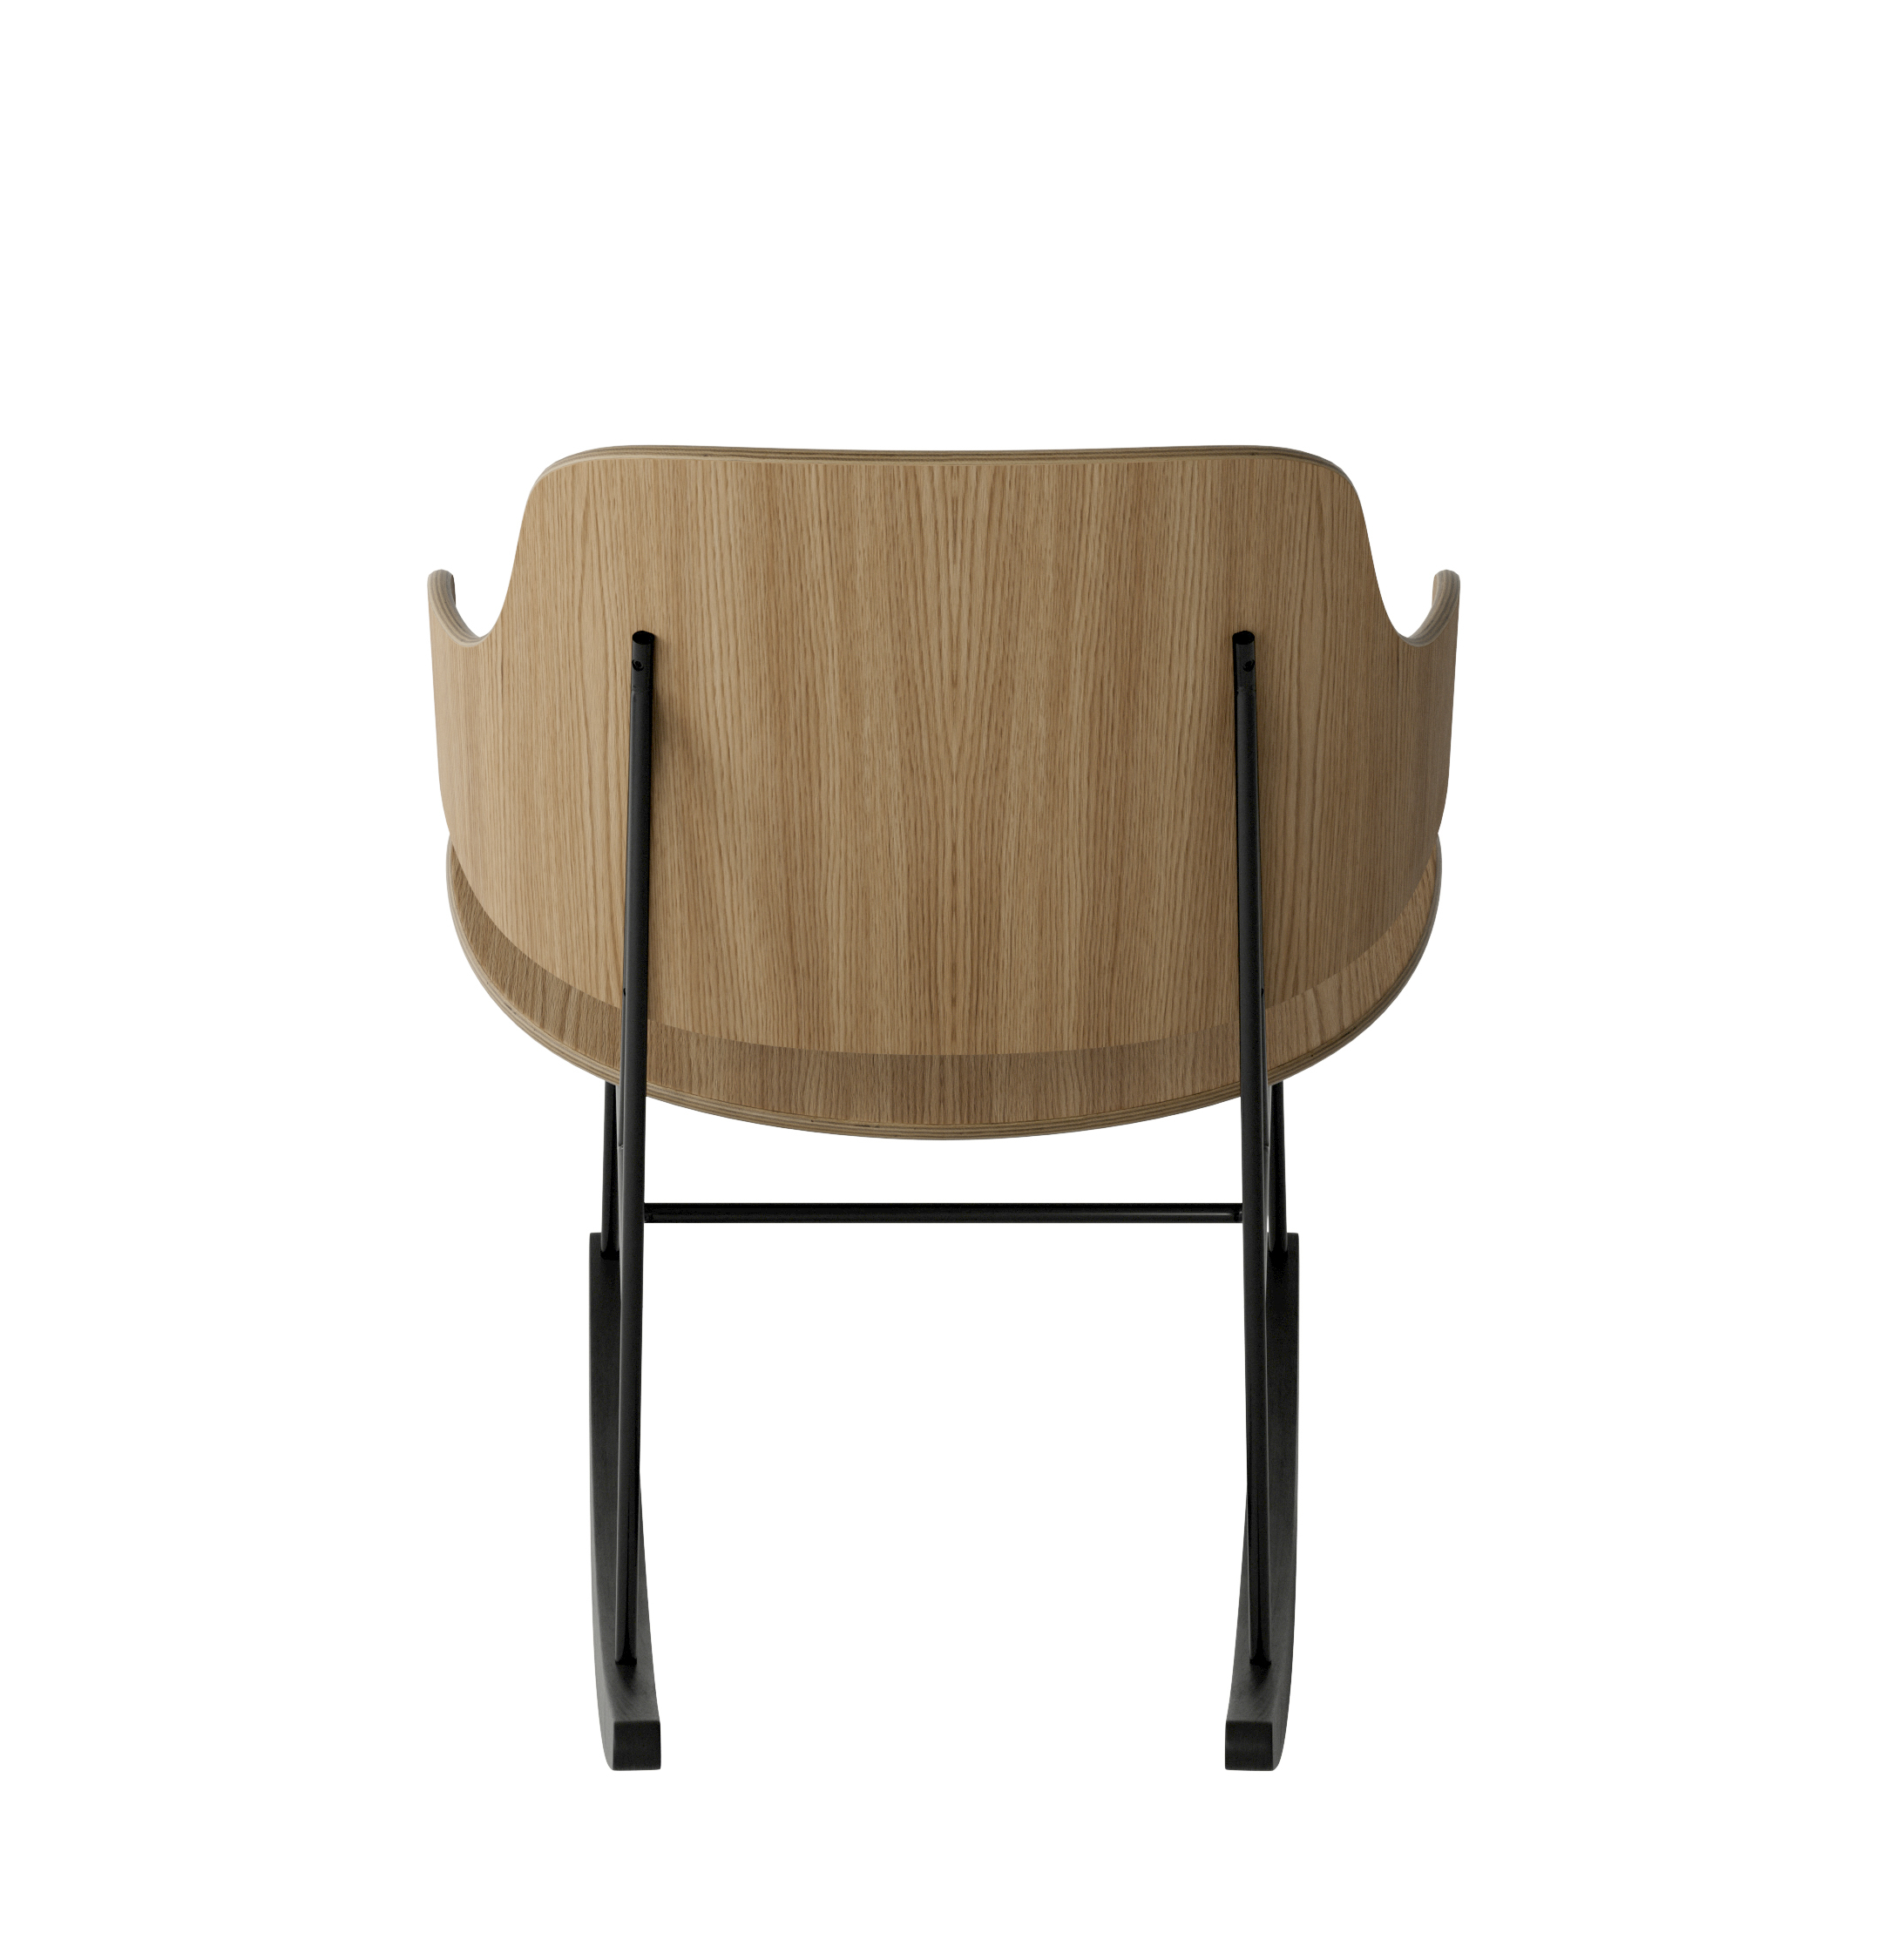 Menu - The Penguin schommelstoel, zwart stalen frame, naturel eiken zitting en rugleuning